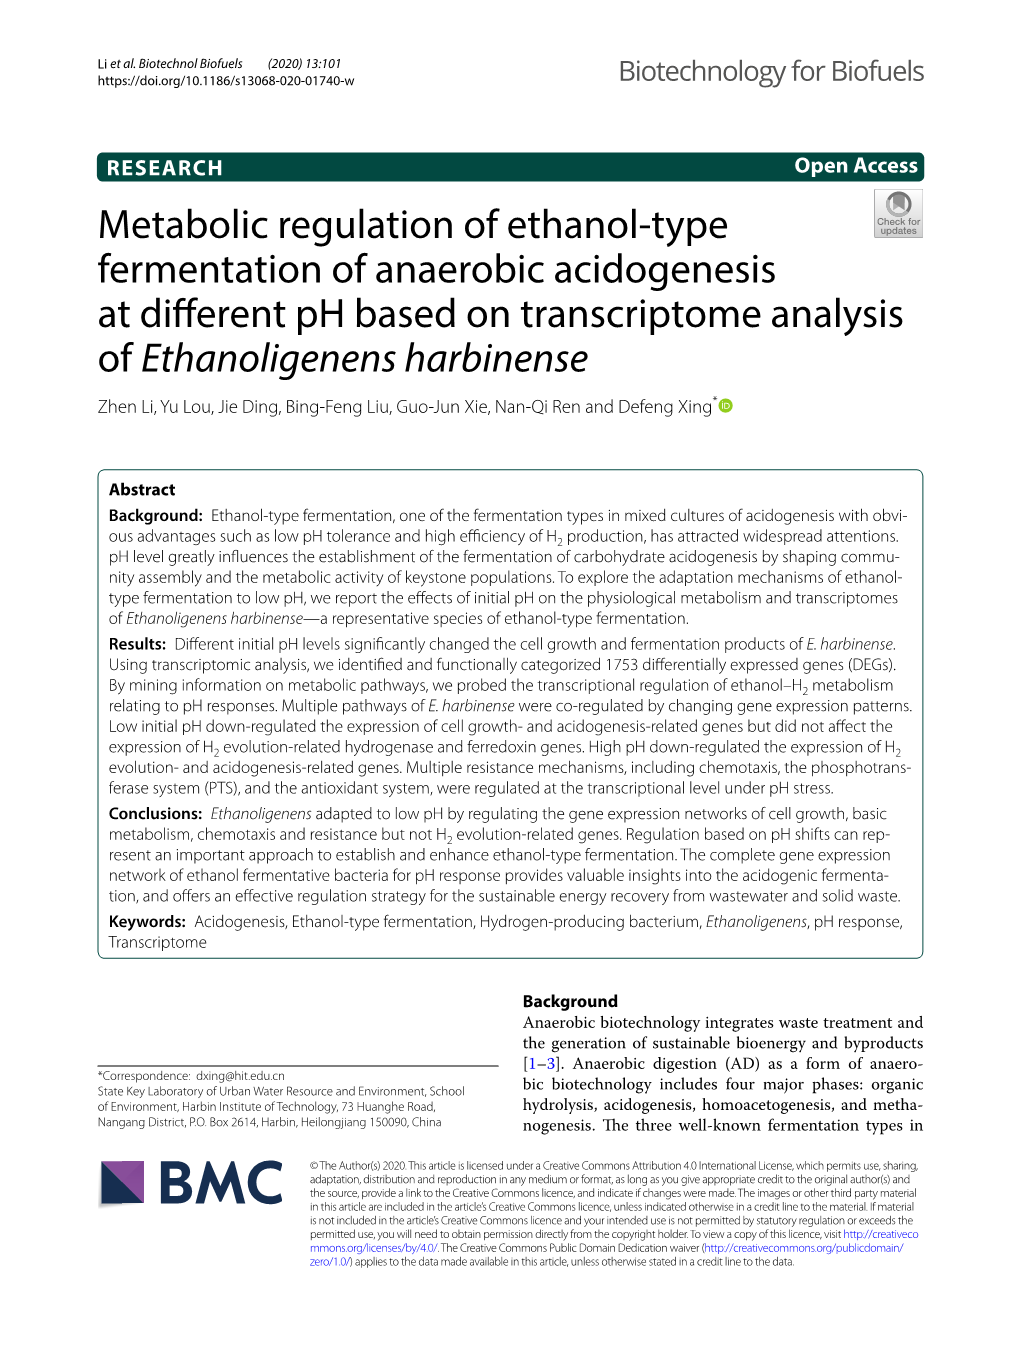 Metabolic Regulation of Ethanol-Type Fermentation of Anaerobic